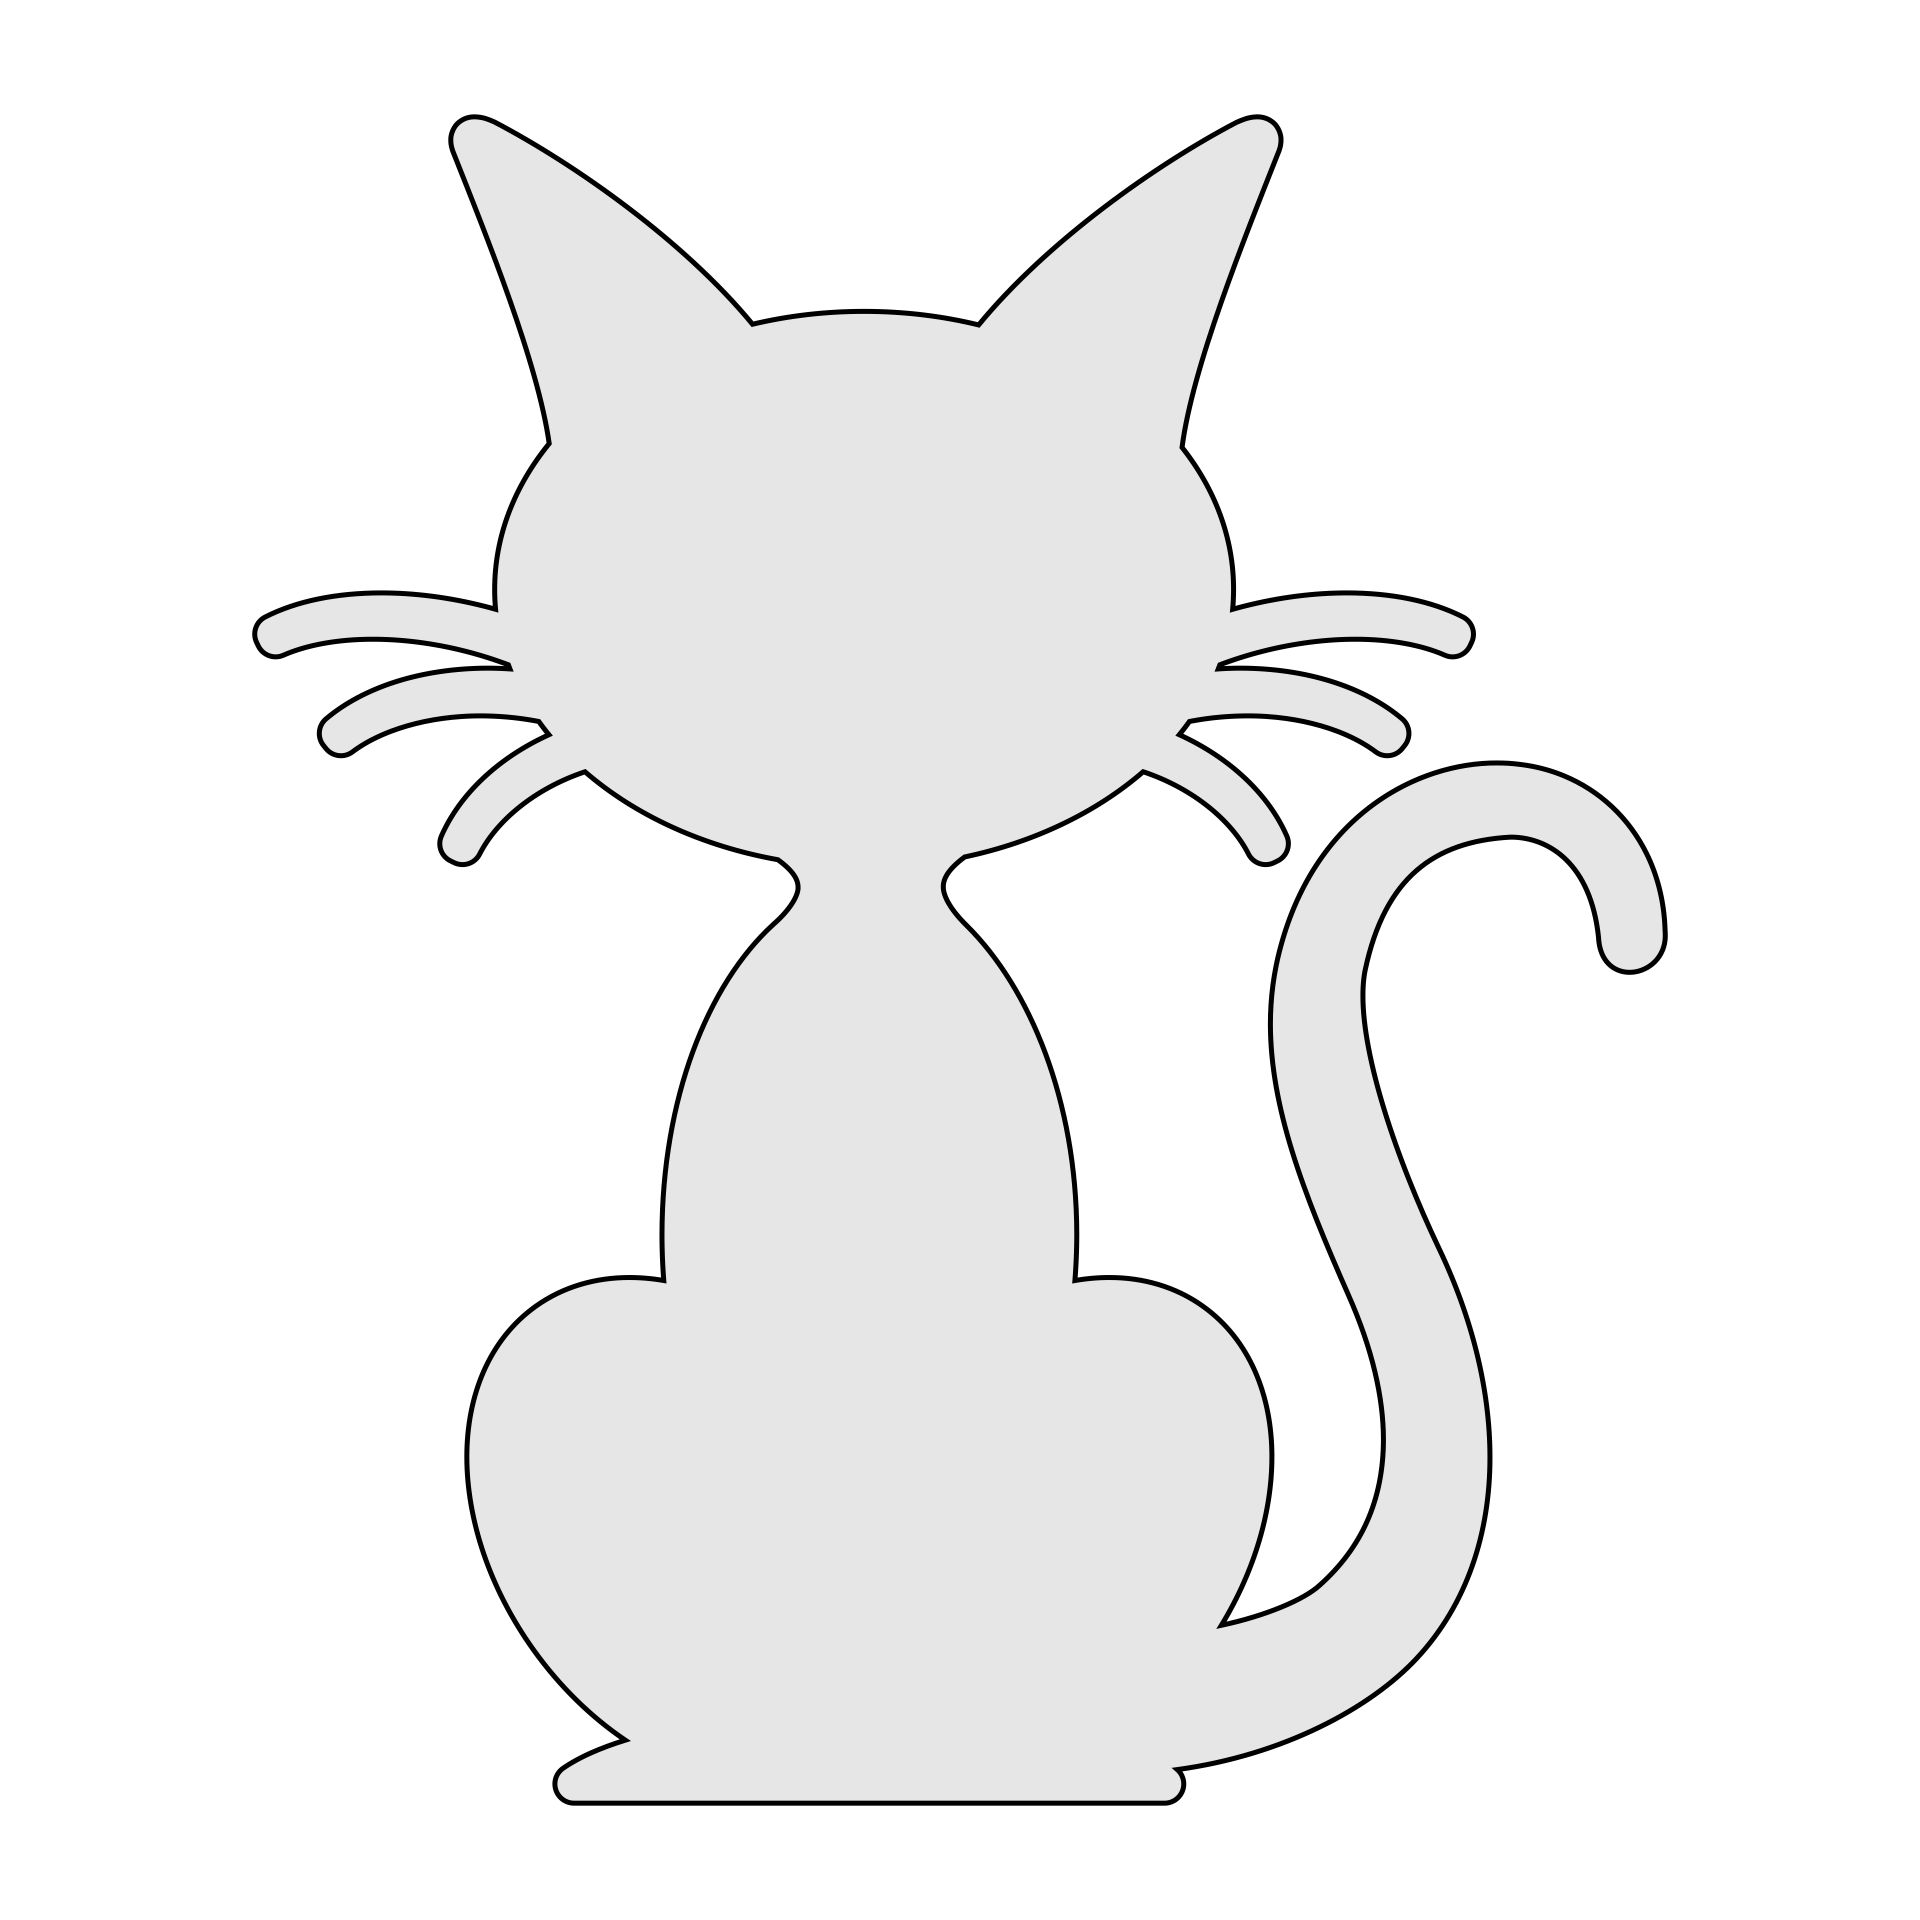 Free Printable Halloween Cat Stencils